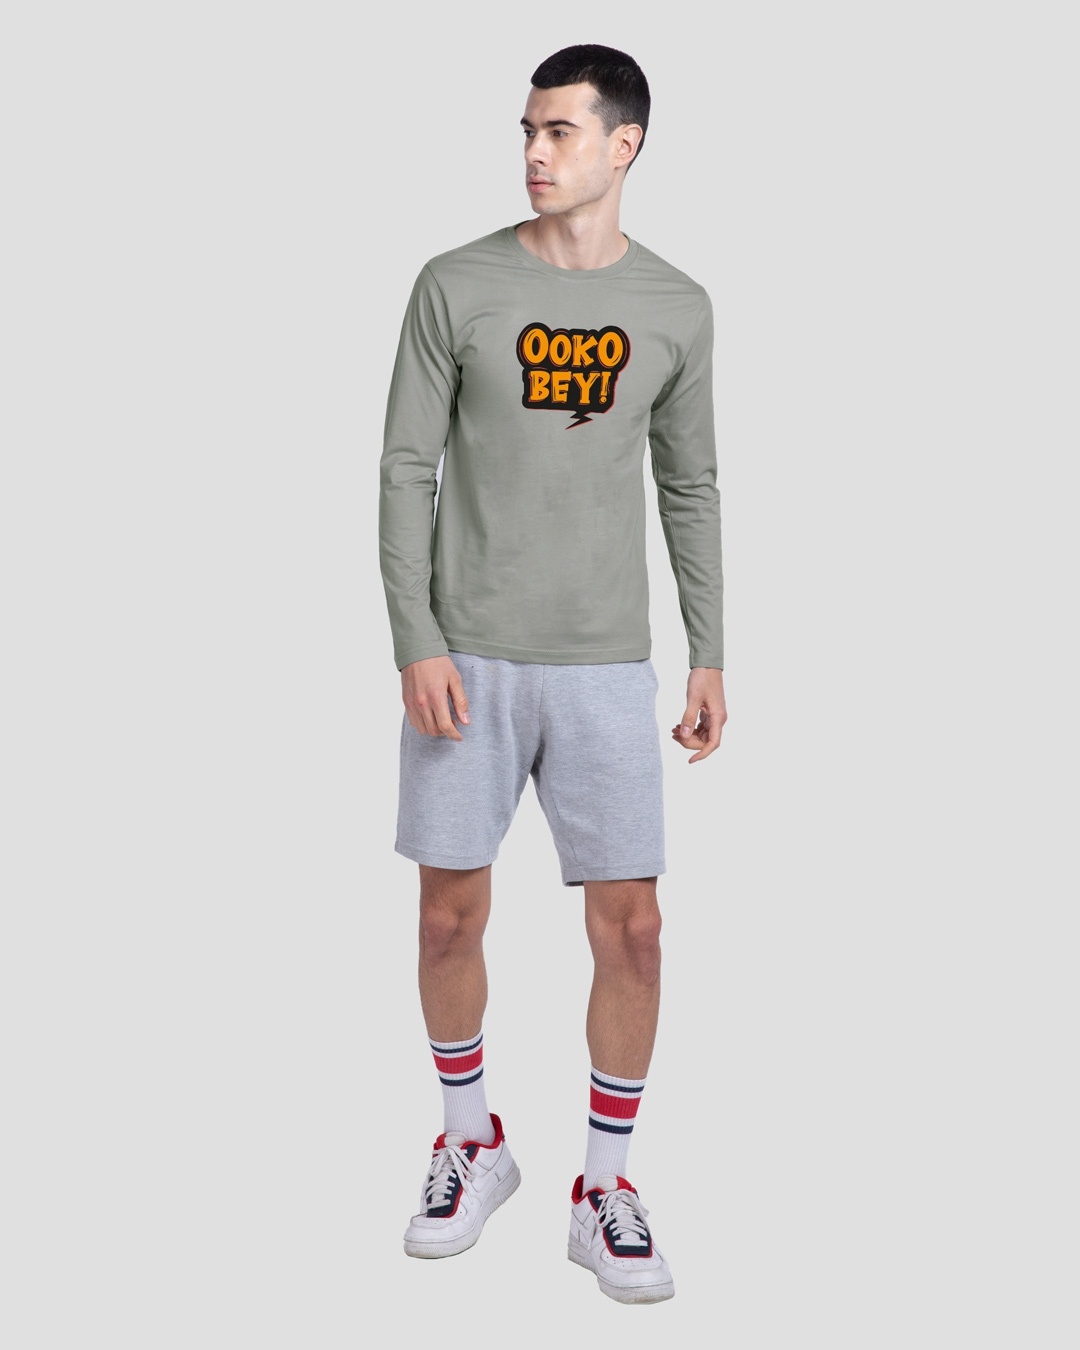 Shop Ooko Bey Full Sleeve T-Shirt-Design